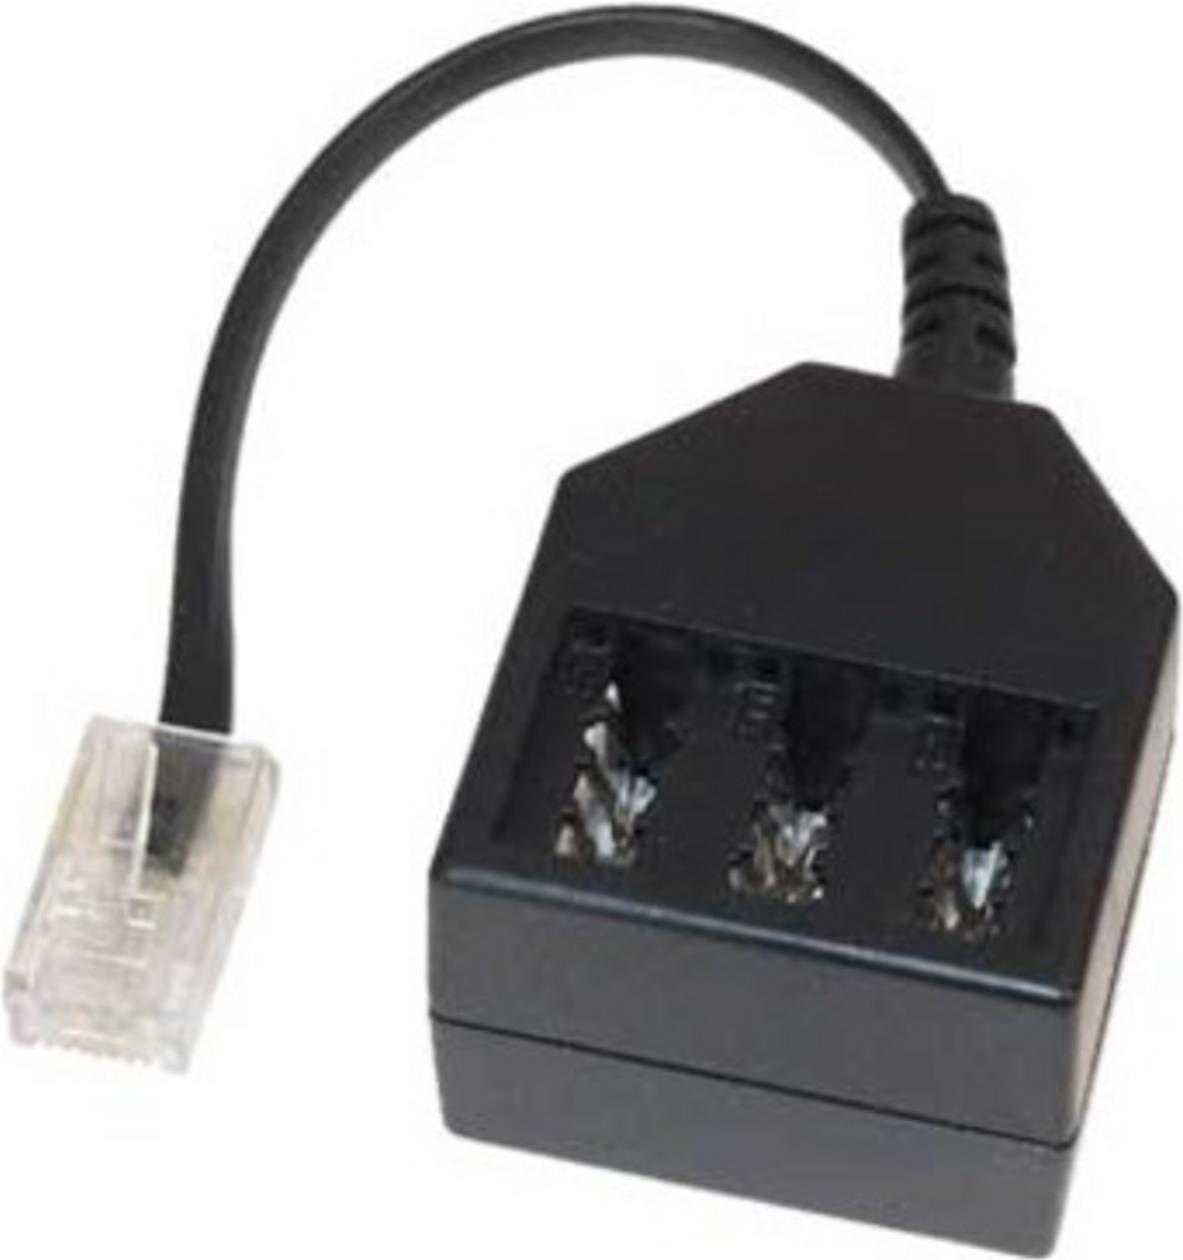 ShiverPeaks S/CONN maximum connectivity Telefon ISDN Adapter-Western-Stecker 6/4 auf TAE Kupplung NFN, 0,2m (71017-1)